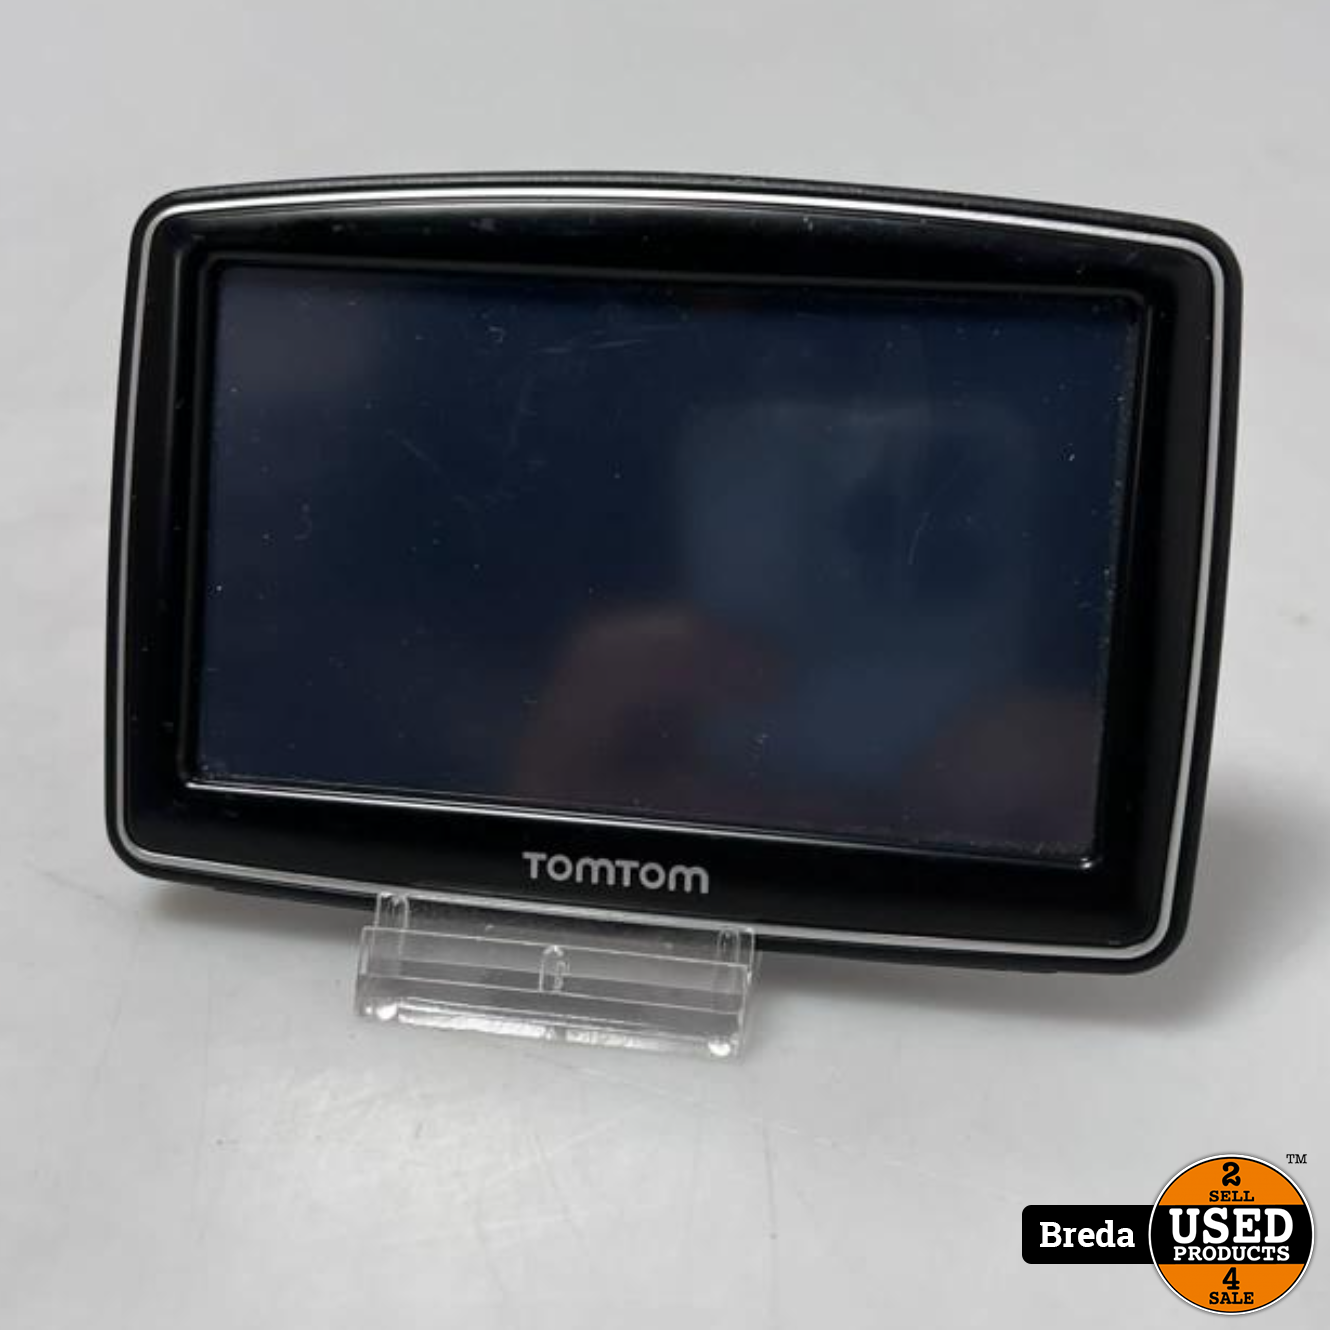 Tomtom XL IQ Routes N14644 2GB | Met garantie - Used Products Breda